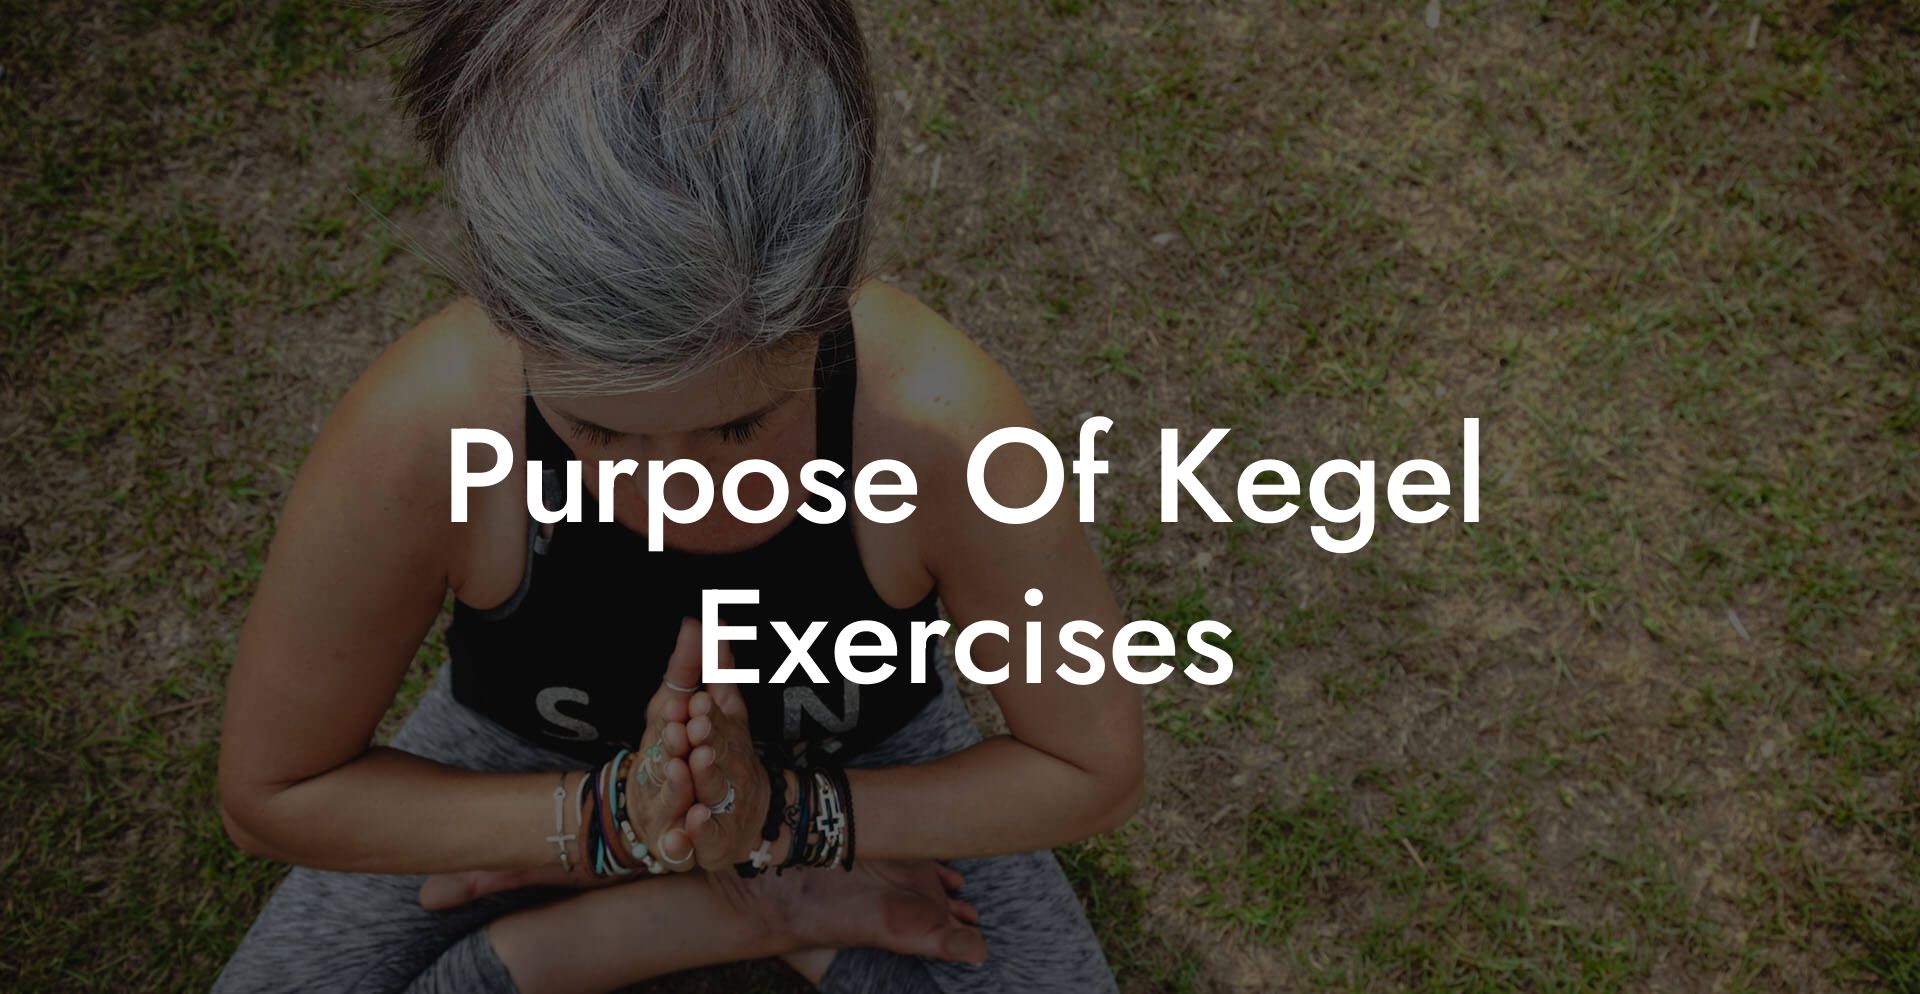 Purpose Of Kegel Exercises